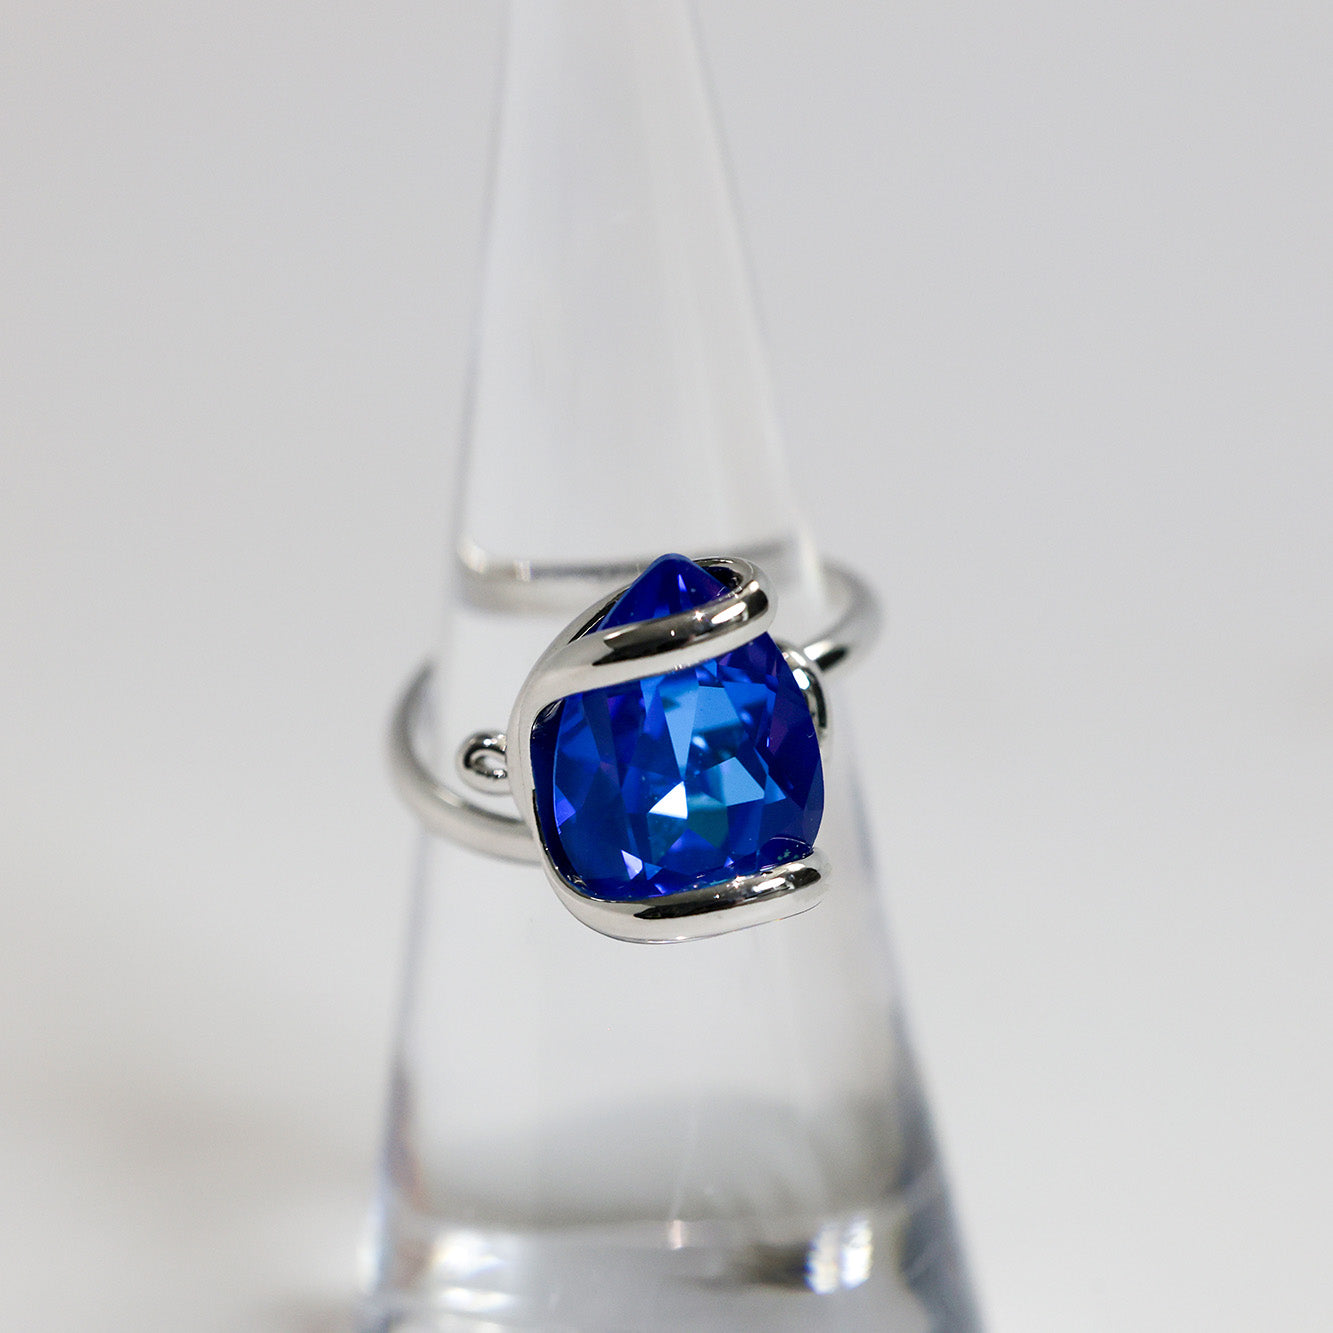 Blue Swarovski Crystal Monique Delite Ring